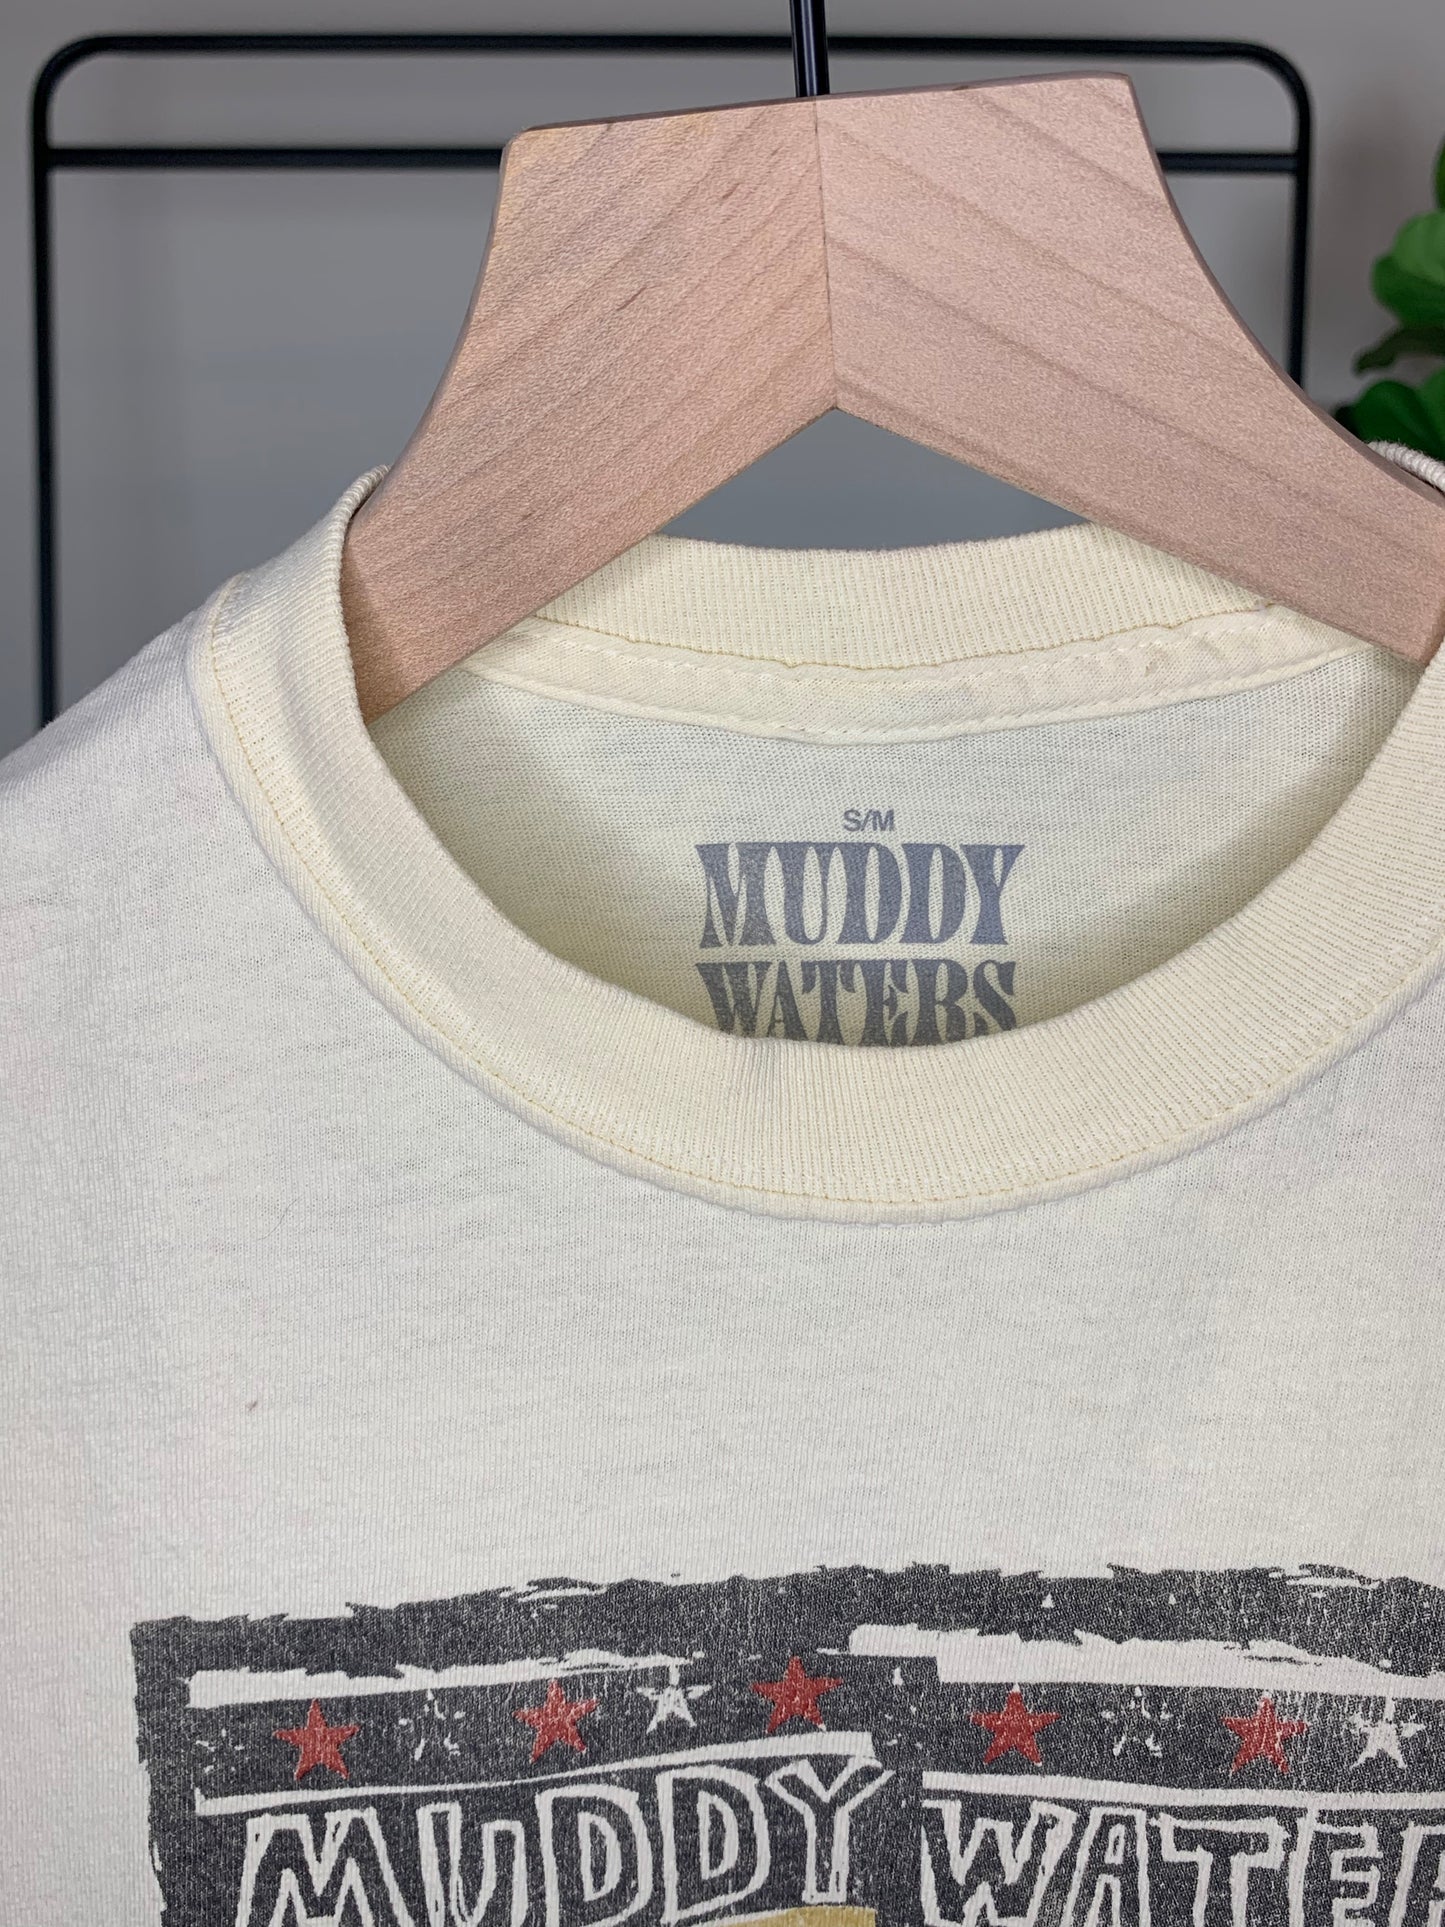 Muddy’s Mojo